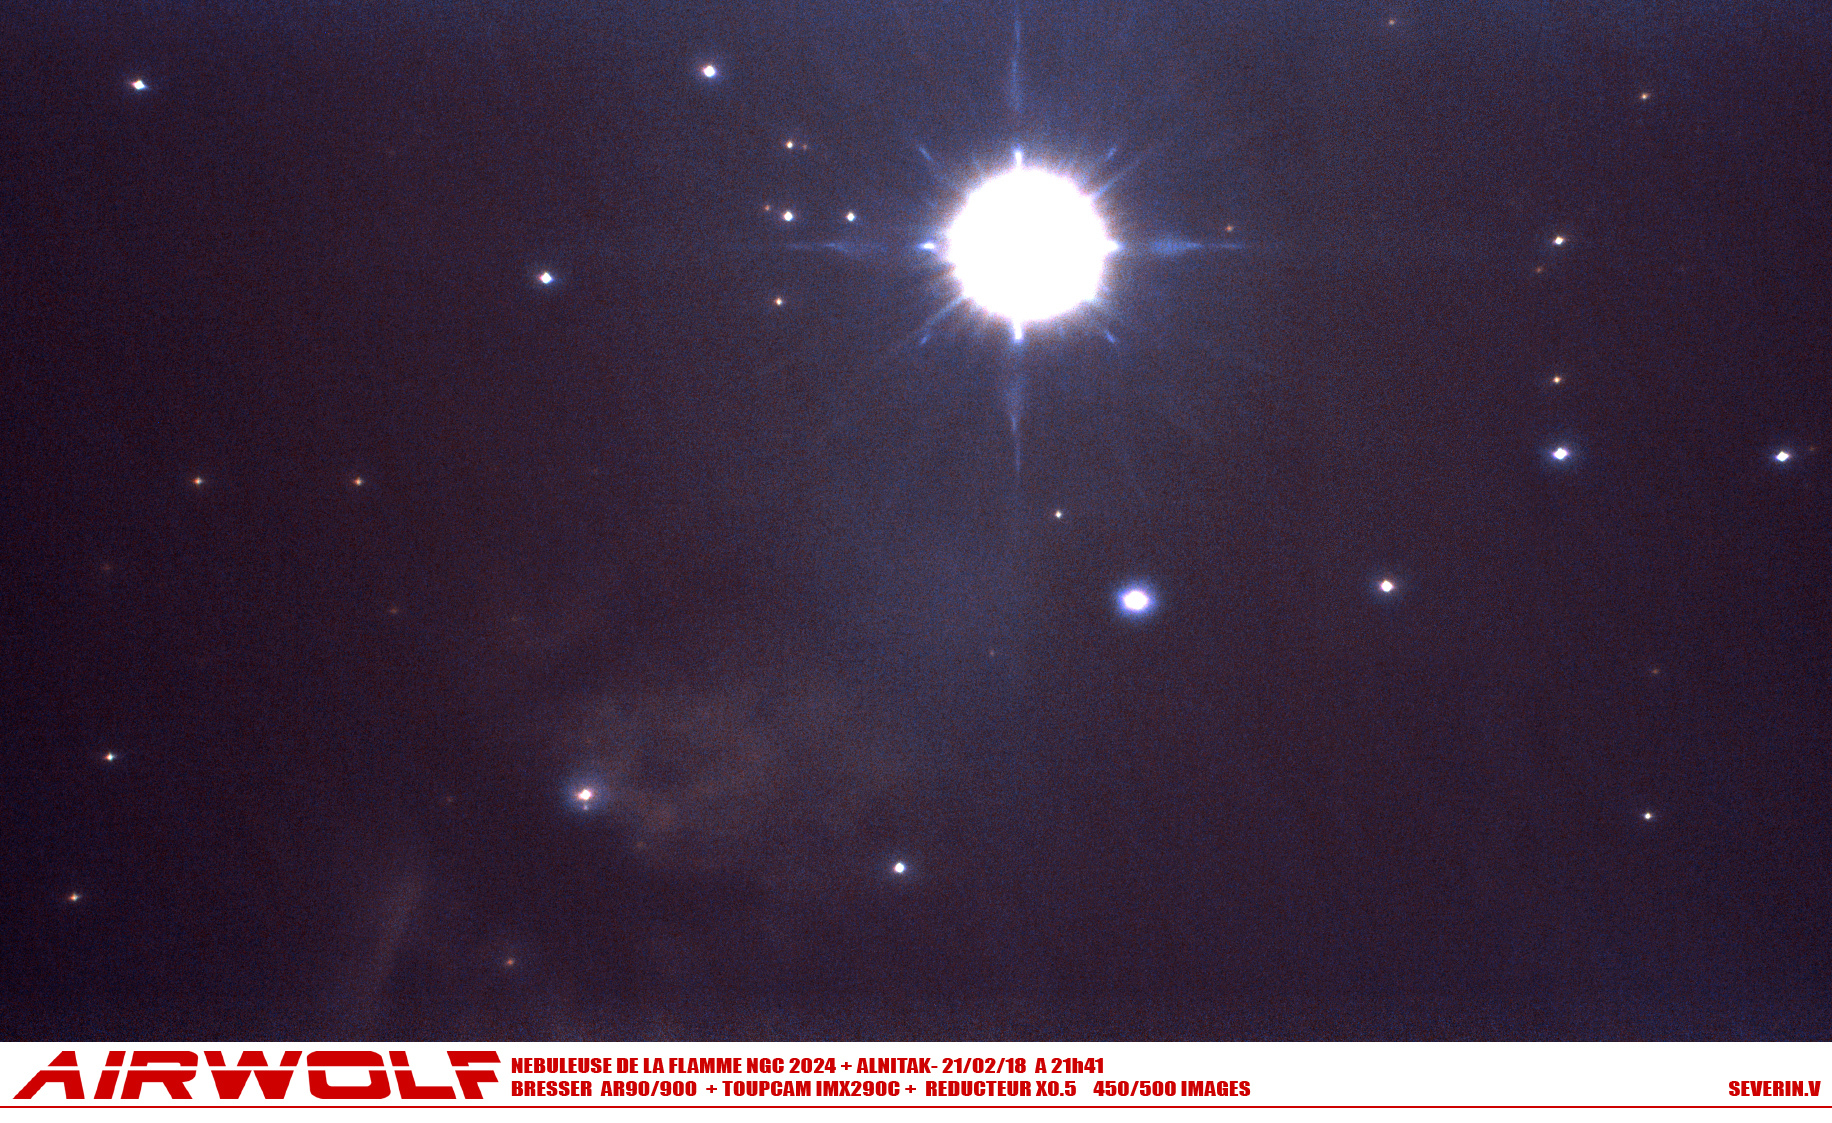 2018-02-21-21-41-26_lapl4_ap6 - NEBULEUSE DE LA FLAMME NGC 2024 + ALNITAK.jpg